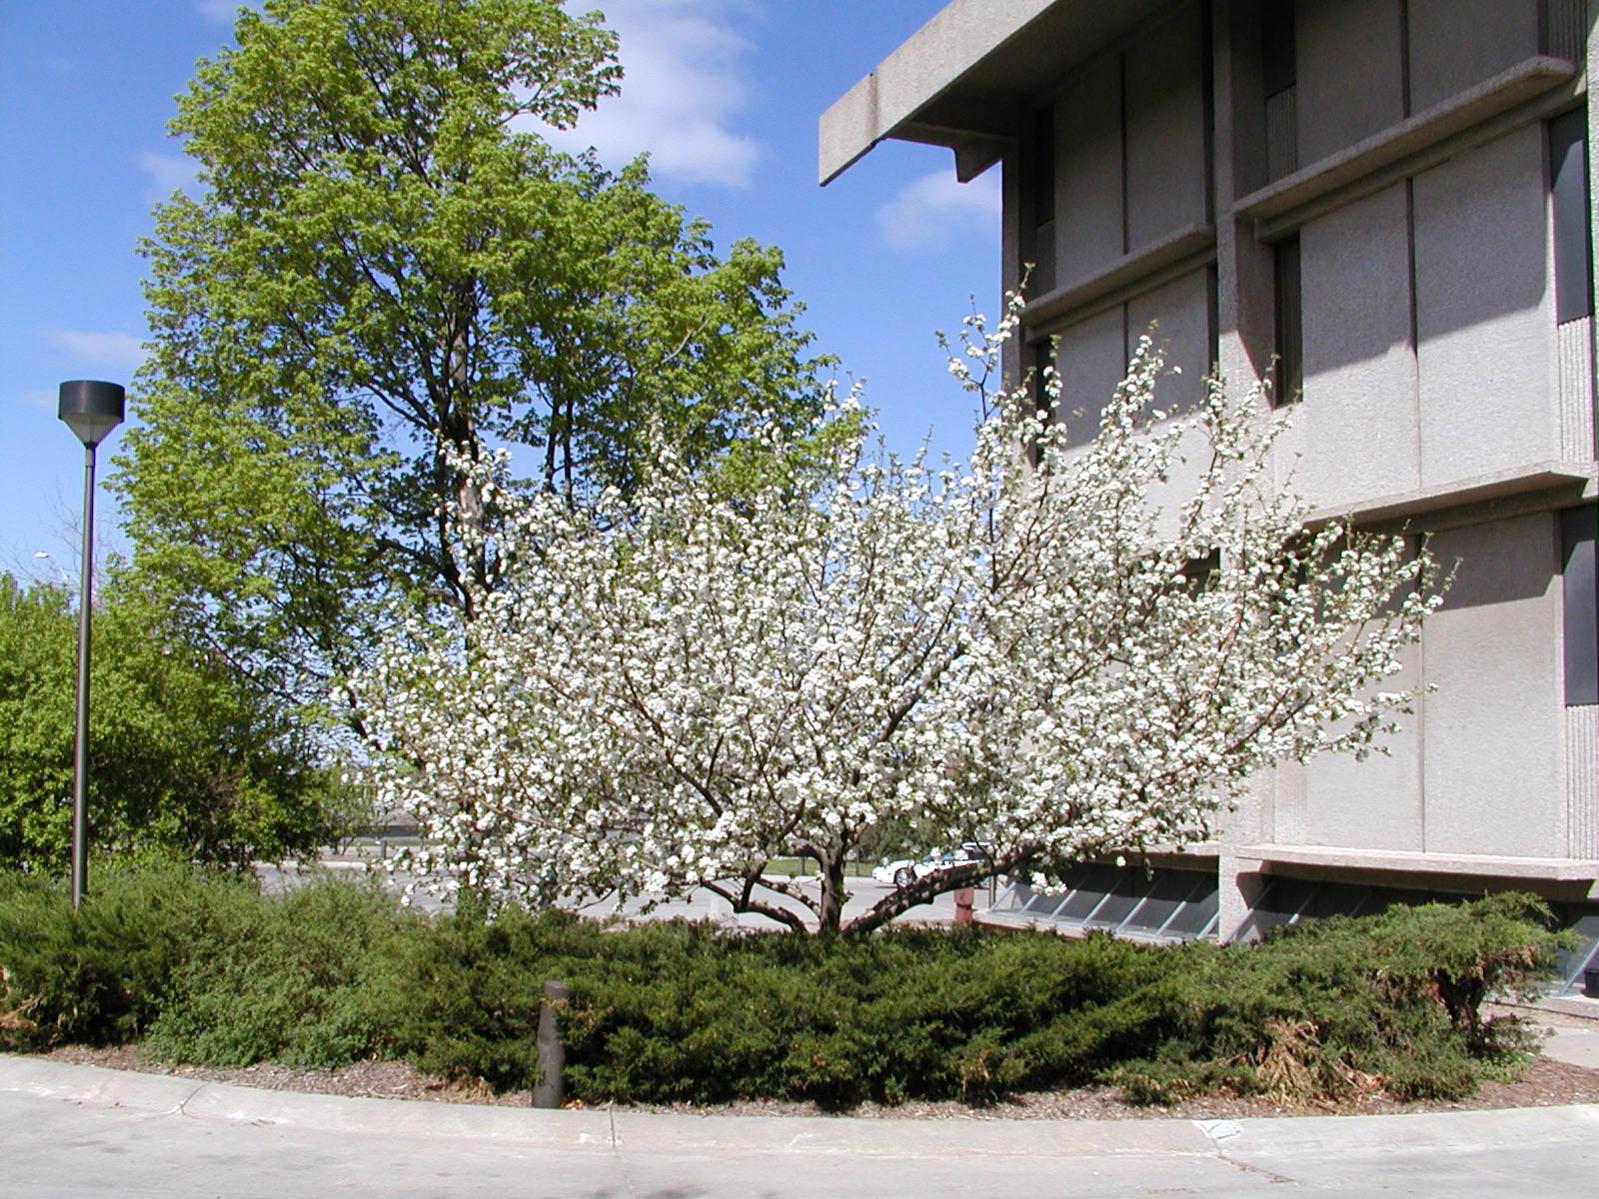 Newton apple tree showcases Landscape Services’ management success | Nebraska Today